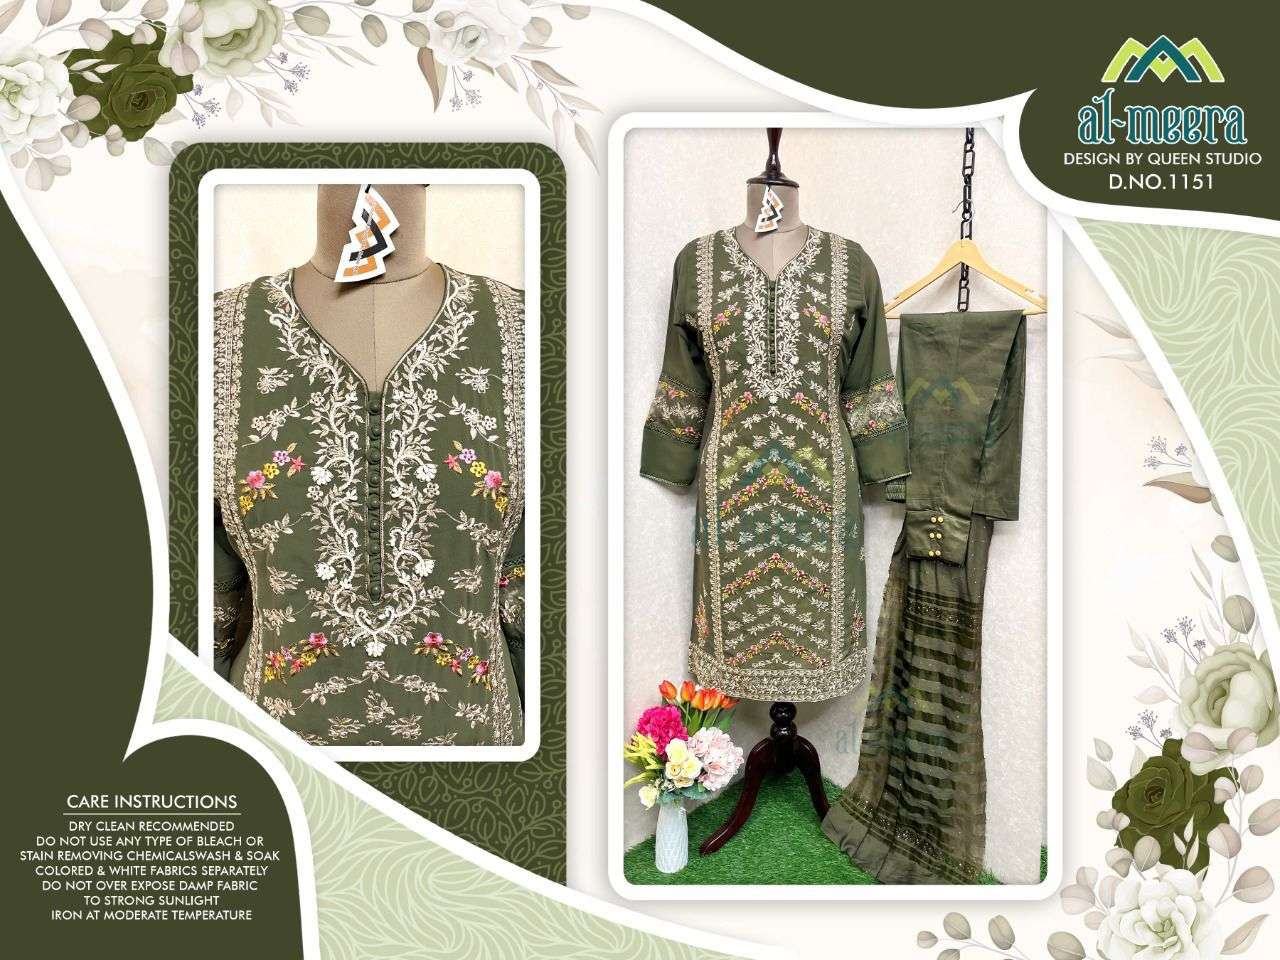 al meera 1151 designer ready made georgette party wear salwar kameez online wholesaler surat  